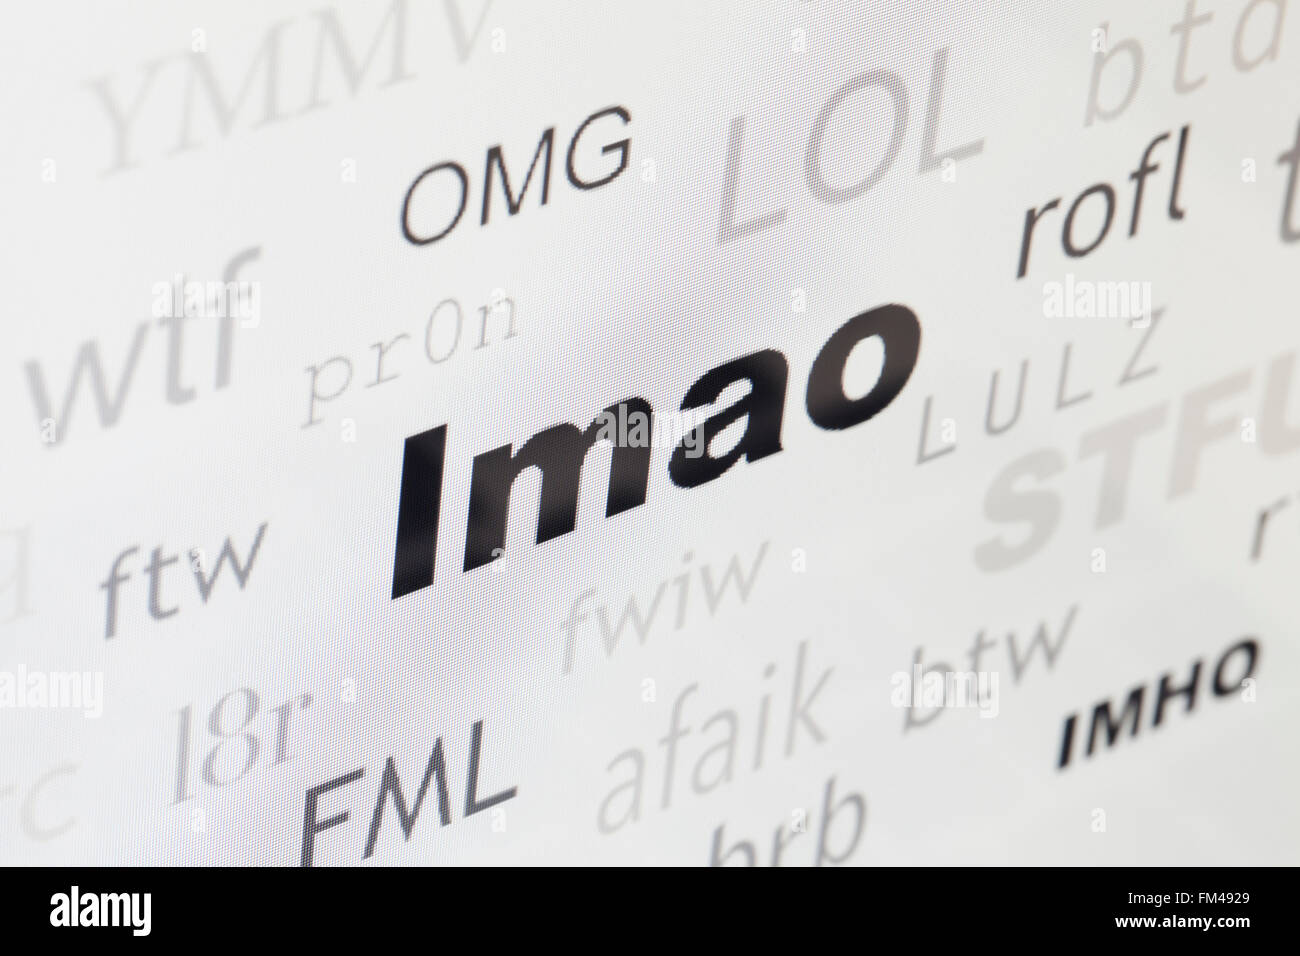 Parola di cloud comunemente usato internet slang evidenziando LMAO - USA Foto Stock